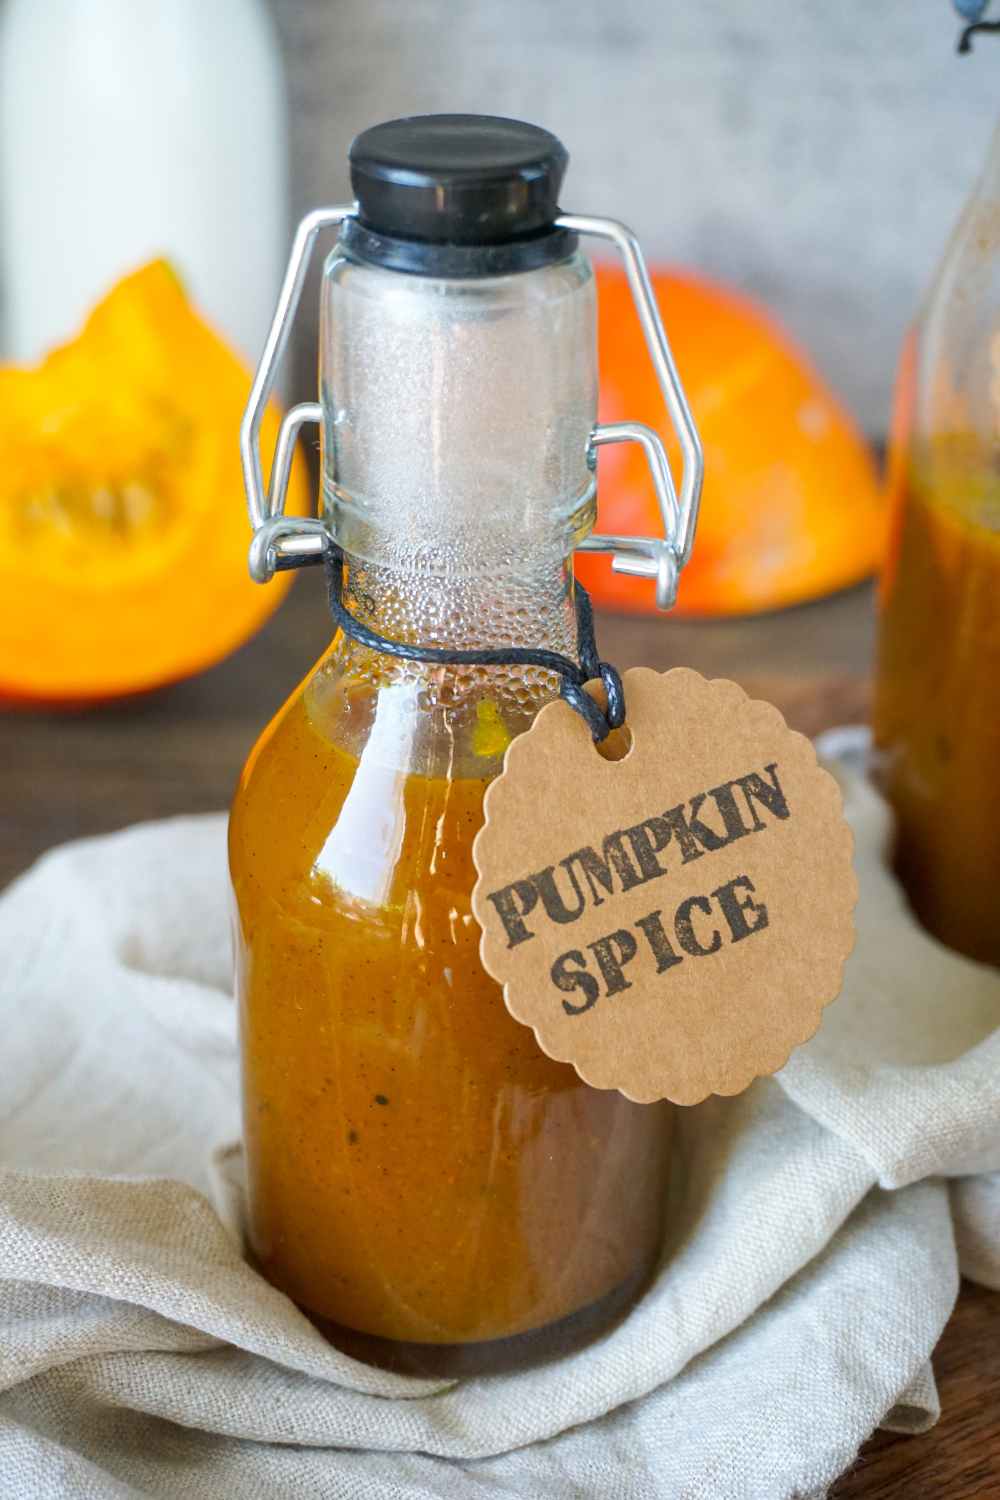 Pumpkin Spice Sirup